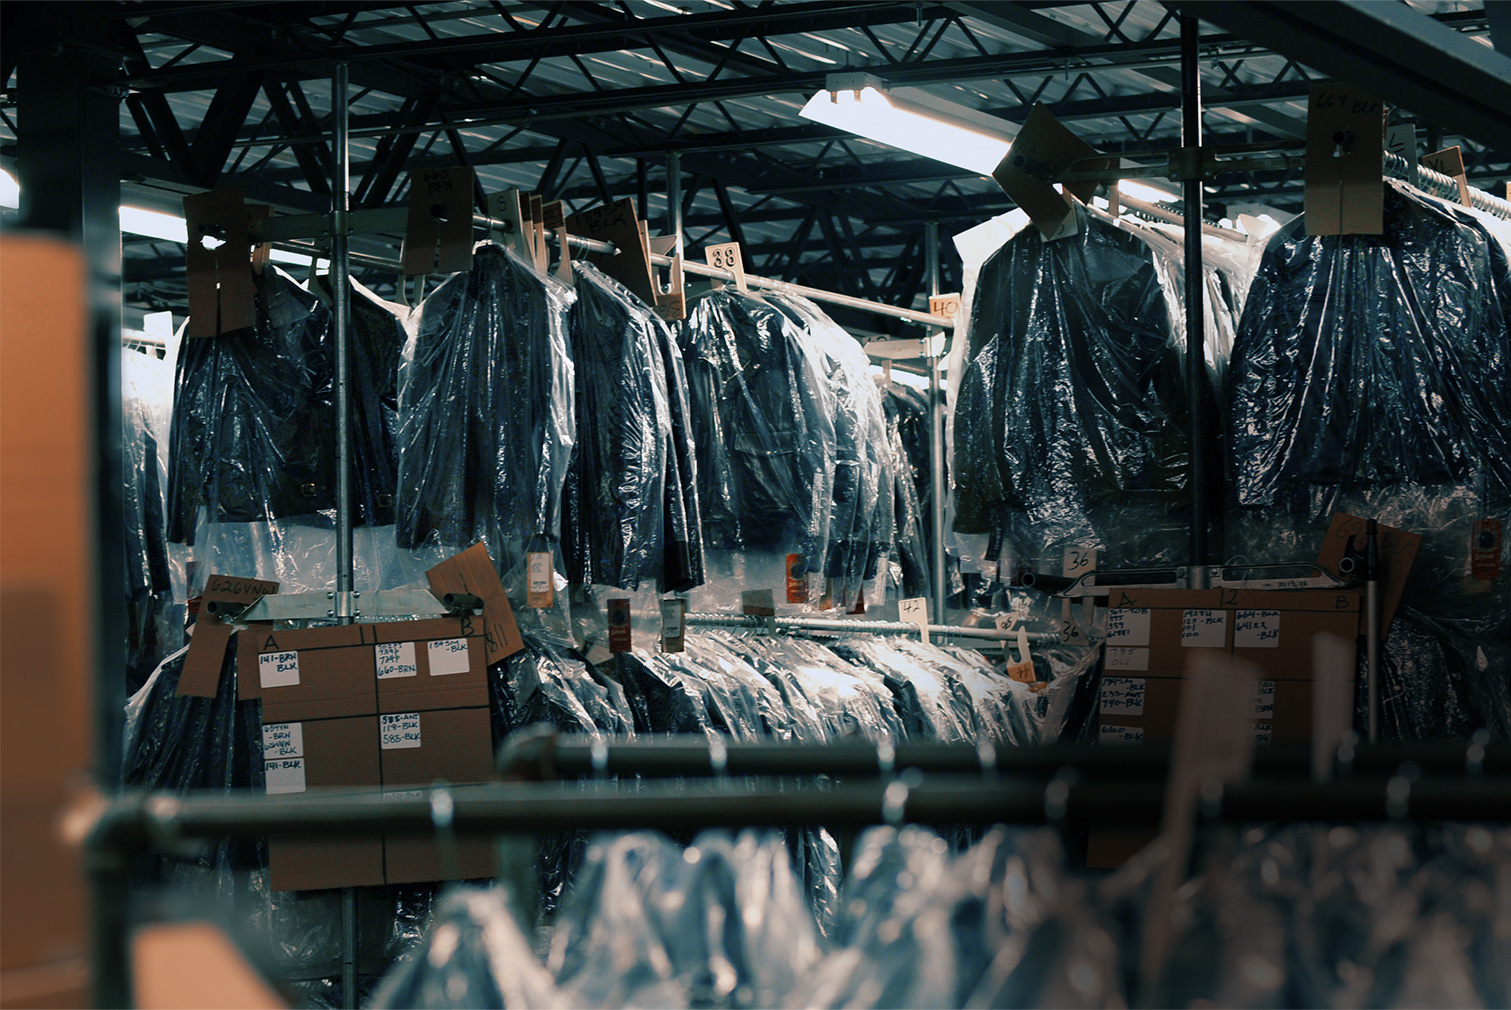 Jackets on hangers in the Schott factory warehouse